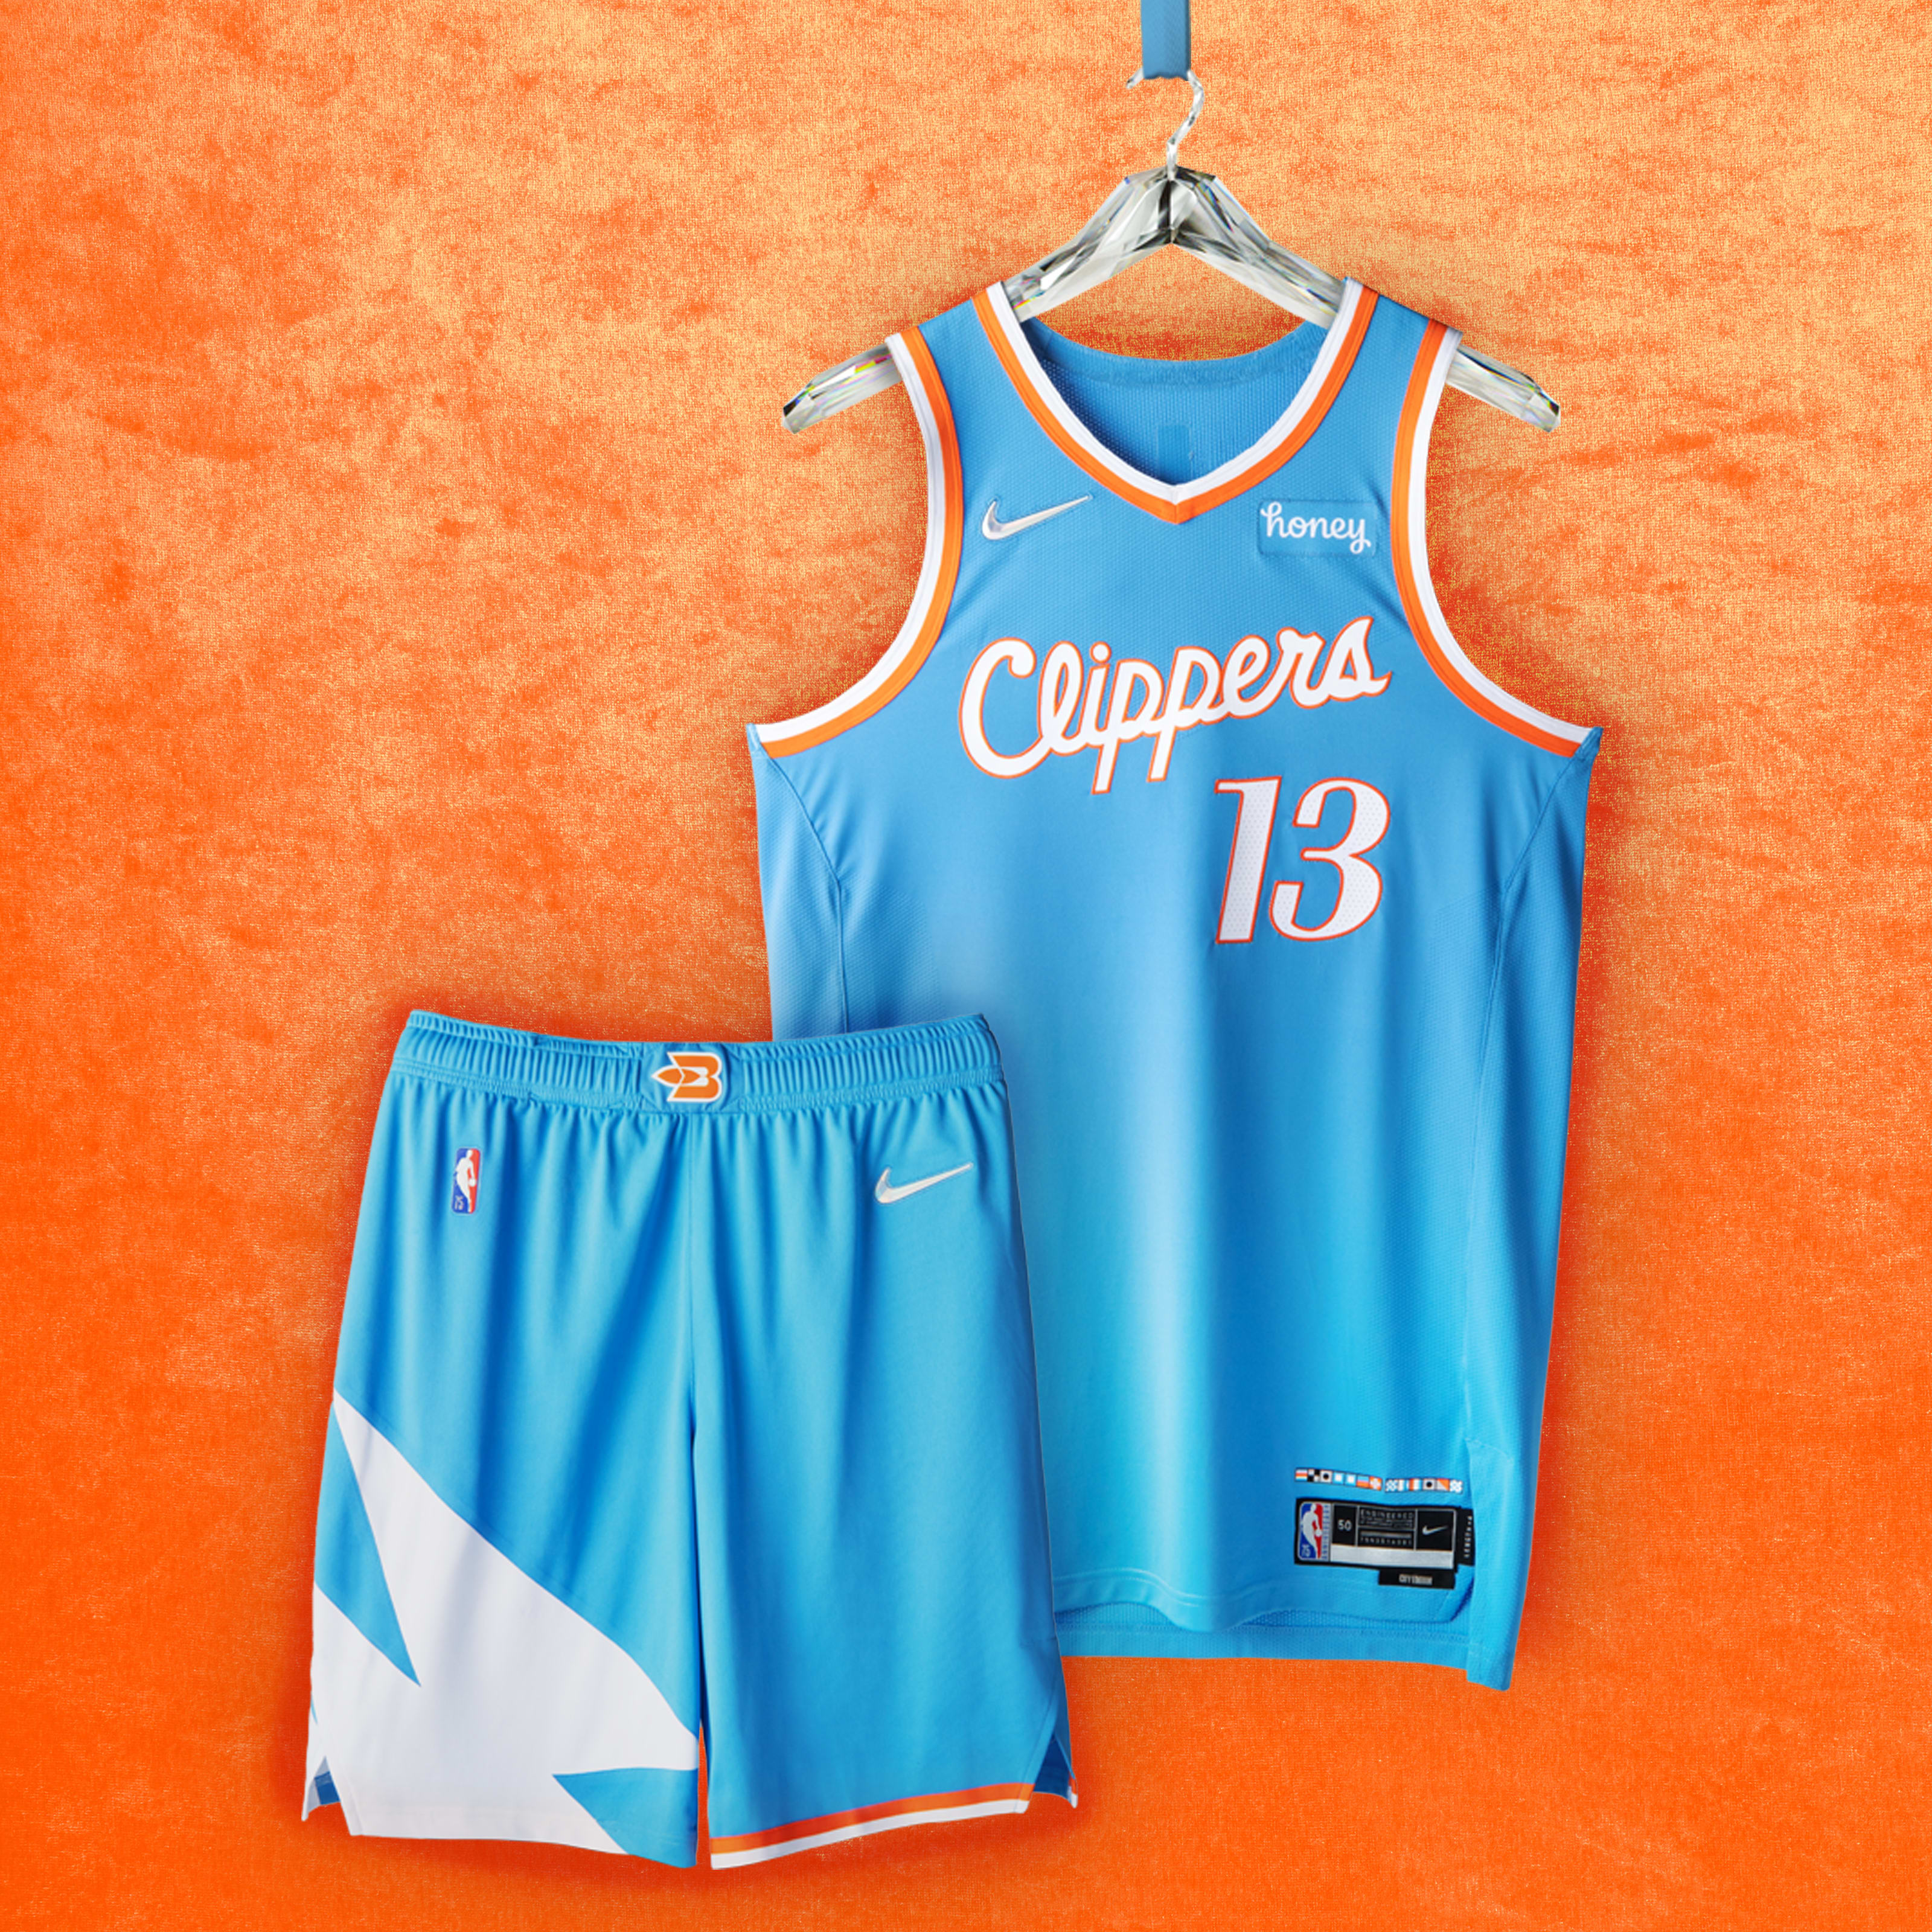 Press Release: L.A. Clippers Unveil 2017-18 Nike Uniforms